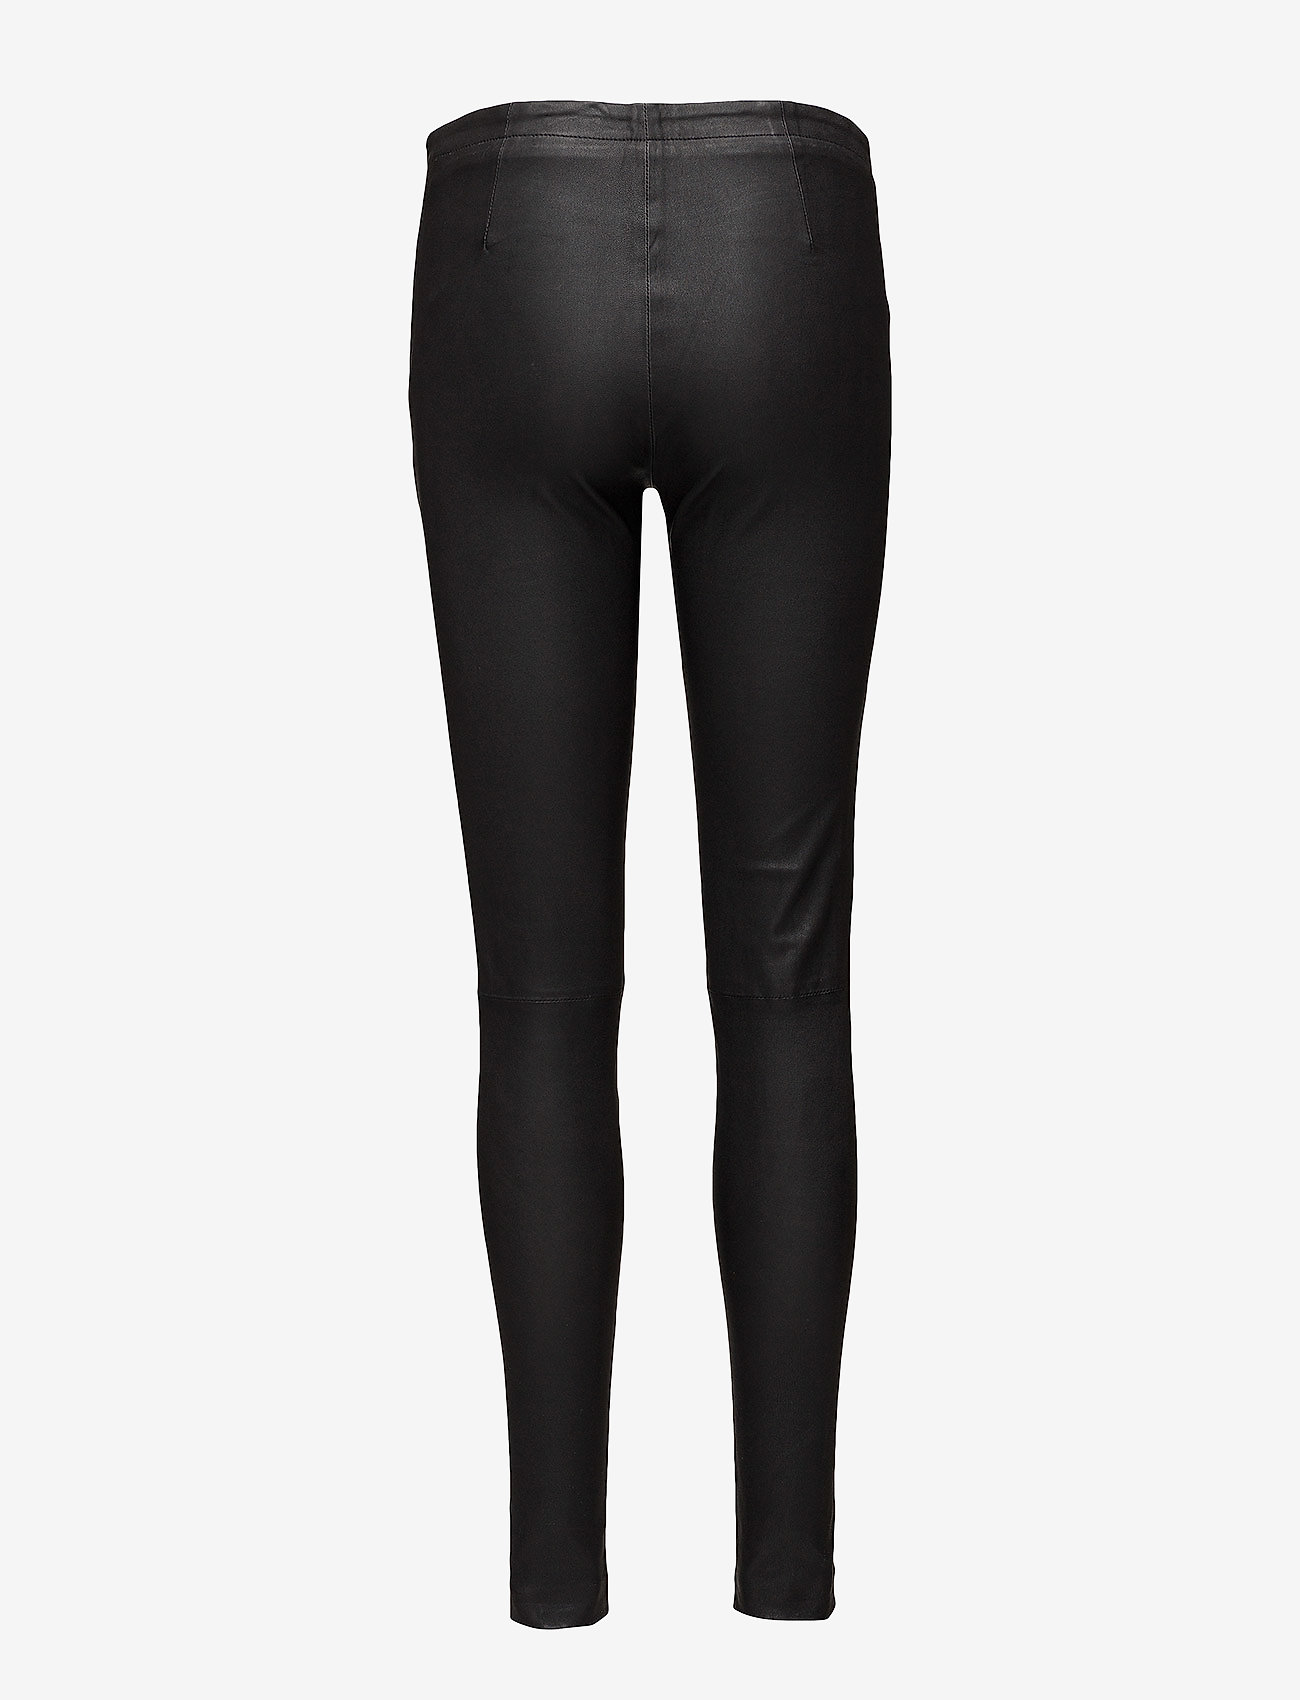 Rosemunde - Leather trousers - leren broeken - black - 1